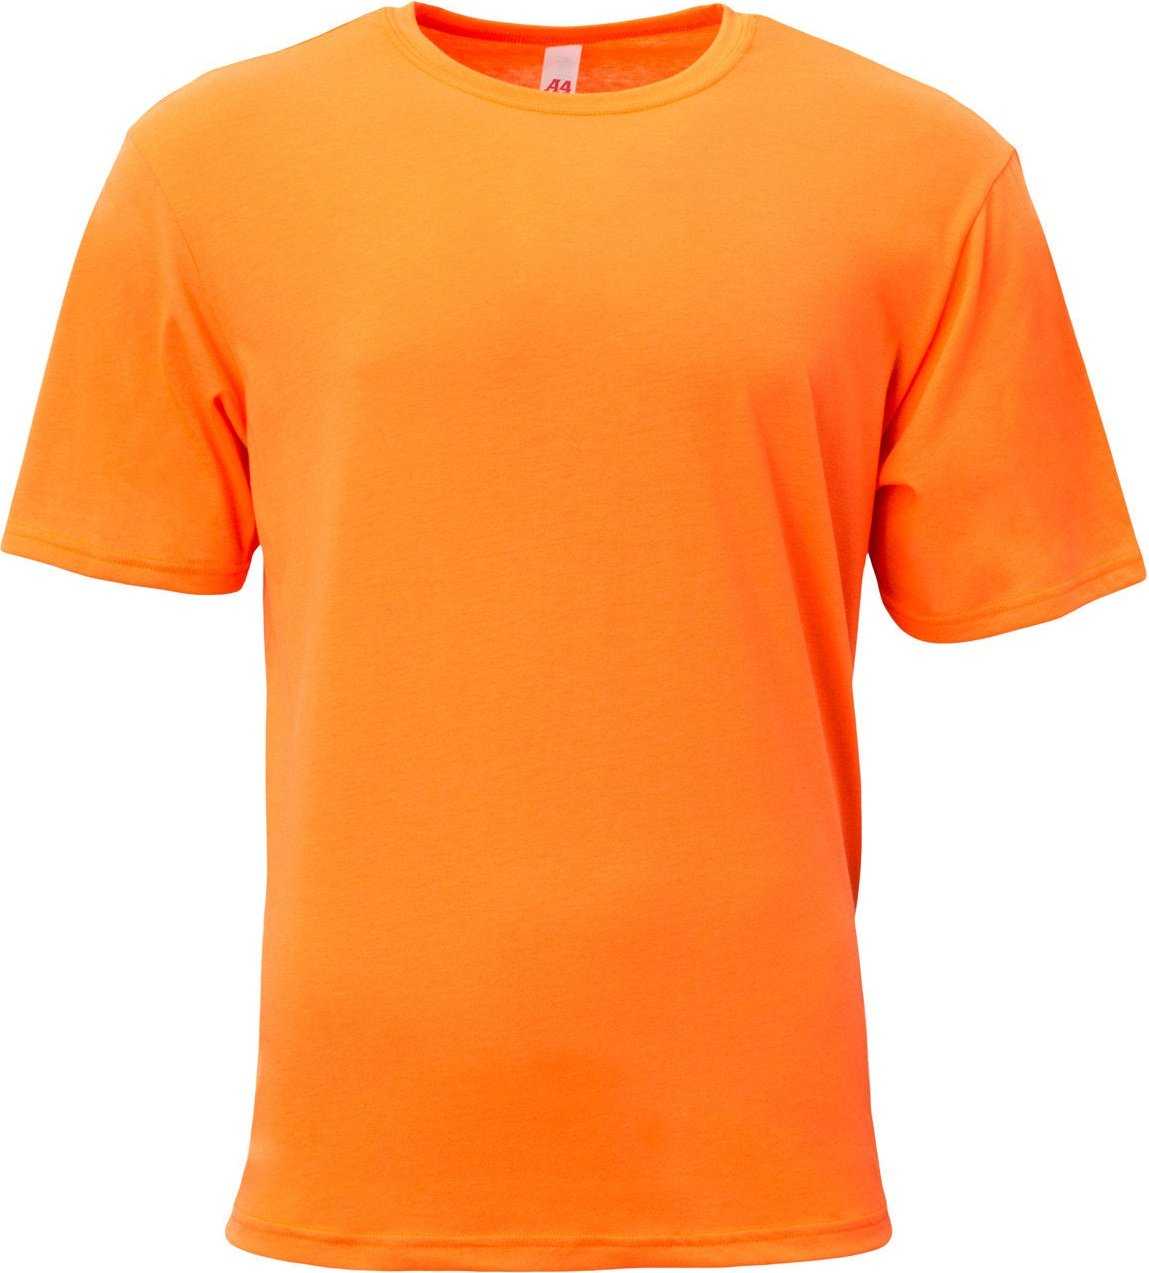 A4 N3013 Adult Softek T-Shirt - SAFETY ORANGE - HIT a Double - 1